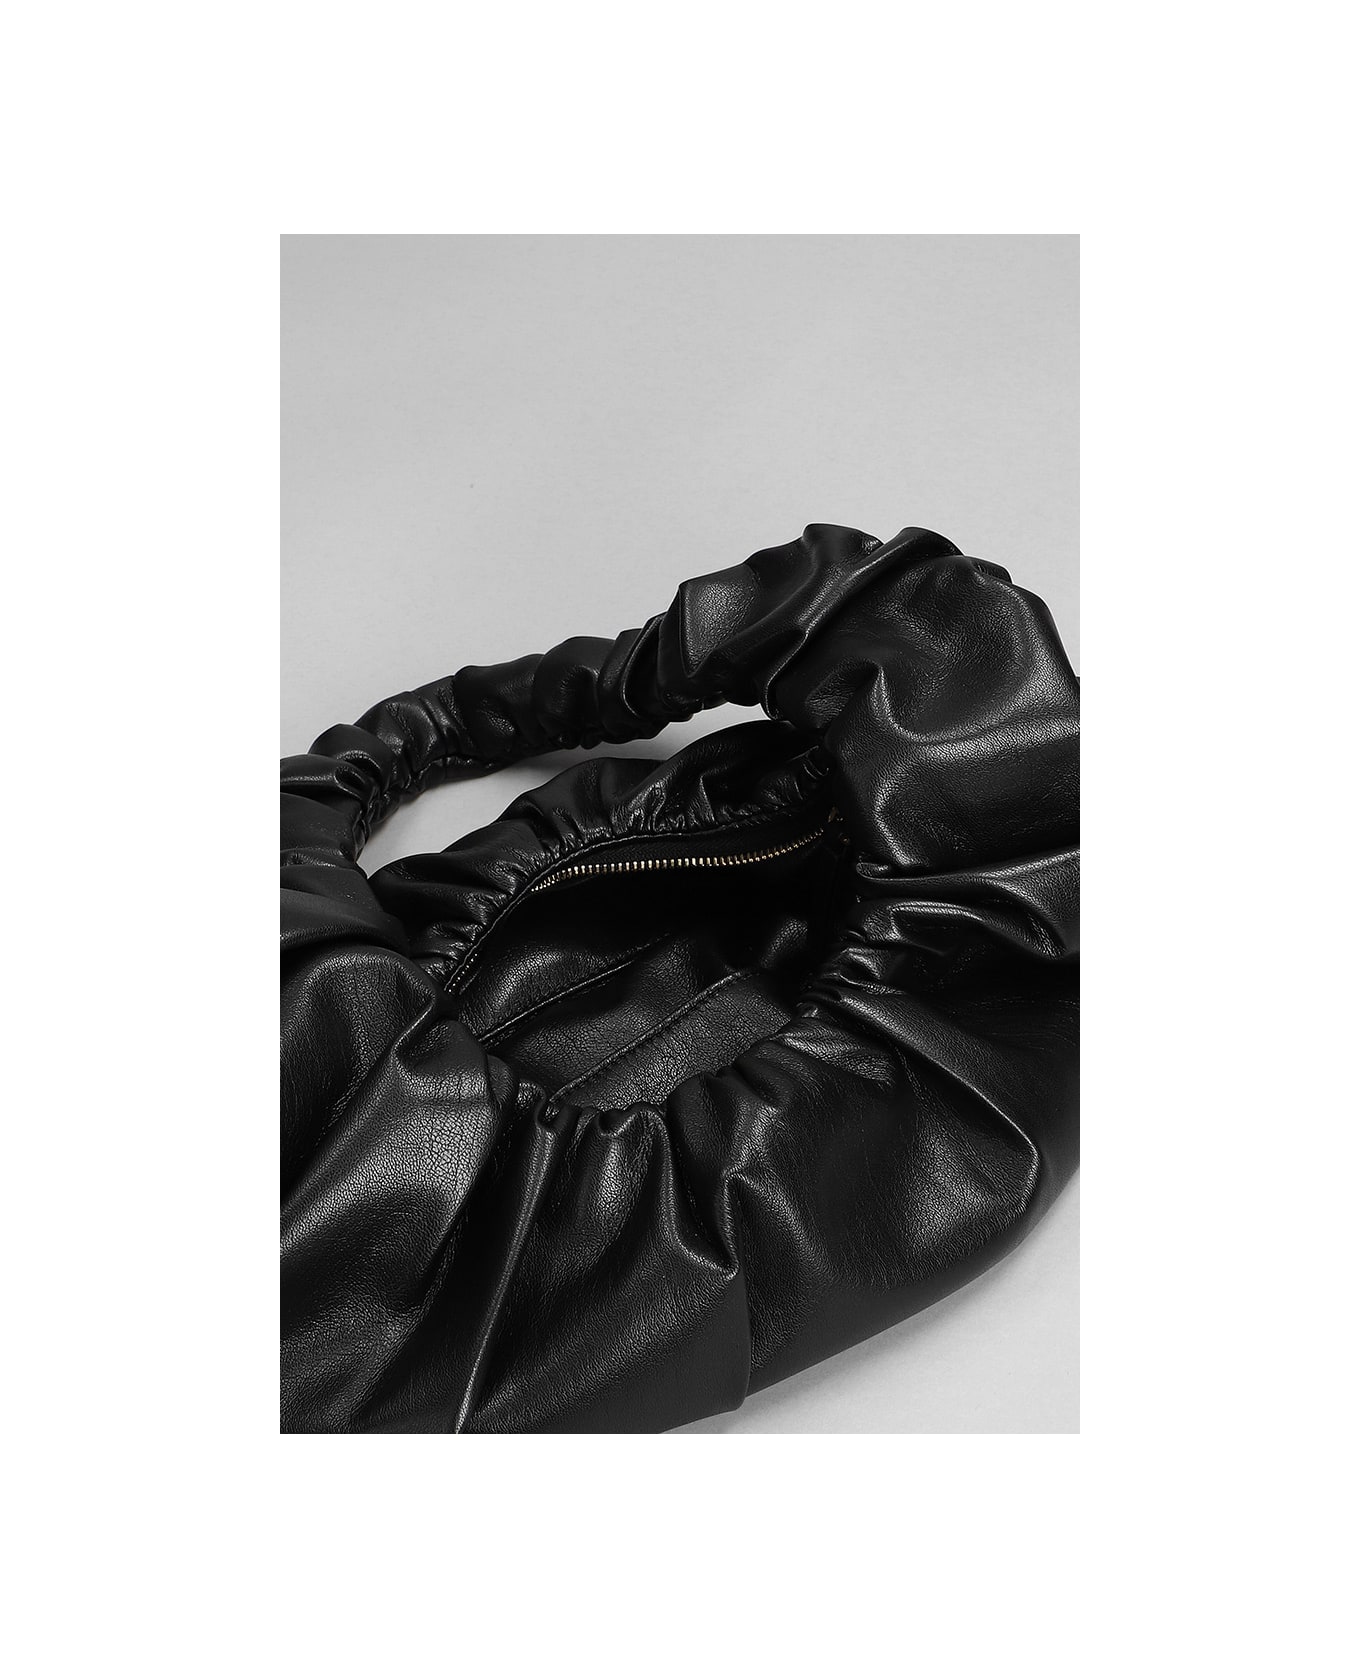 Nanushka Anja Hand Bag In Black Synthetic Leather - Black トートバッグ